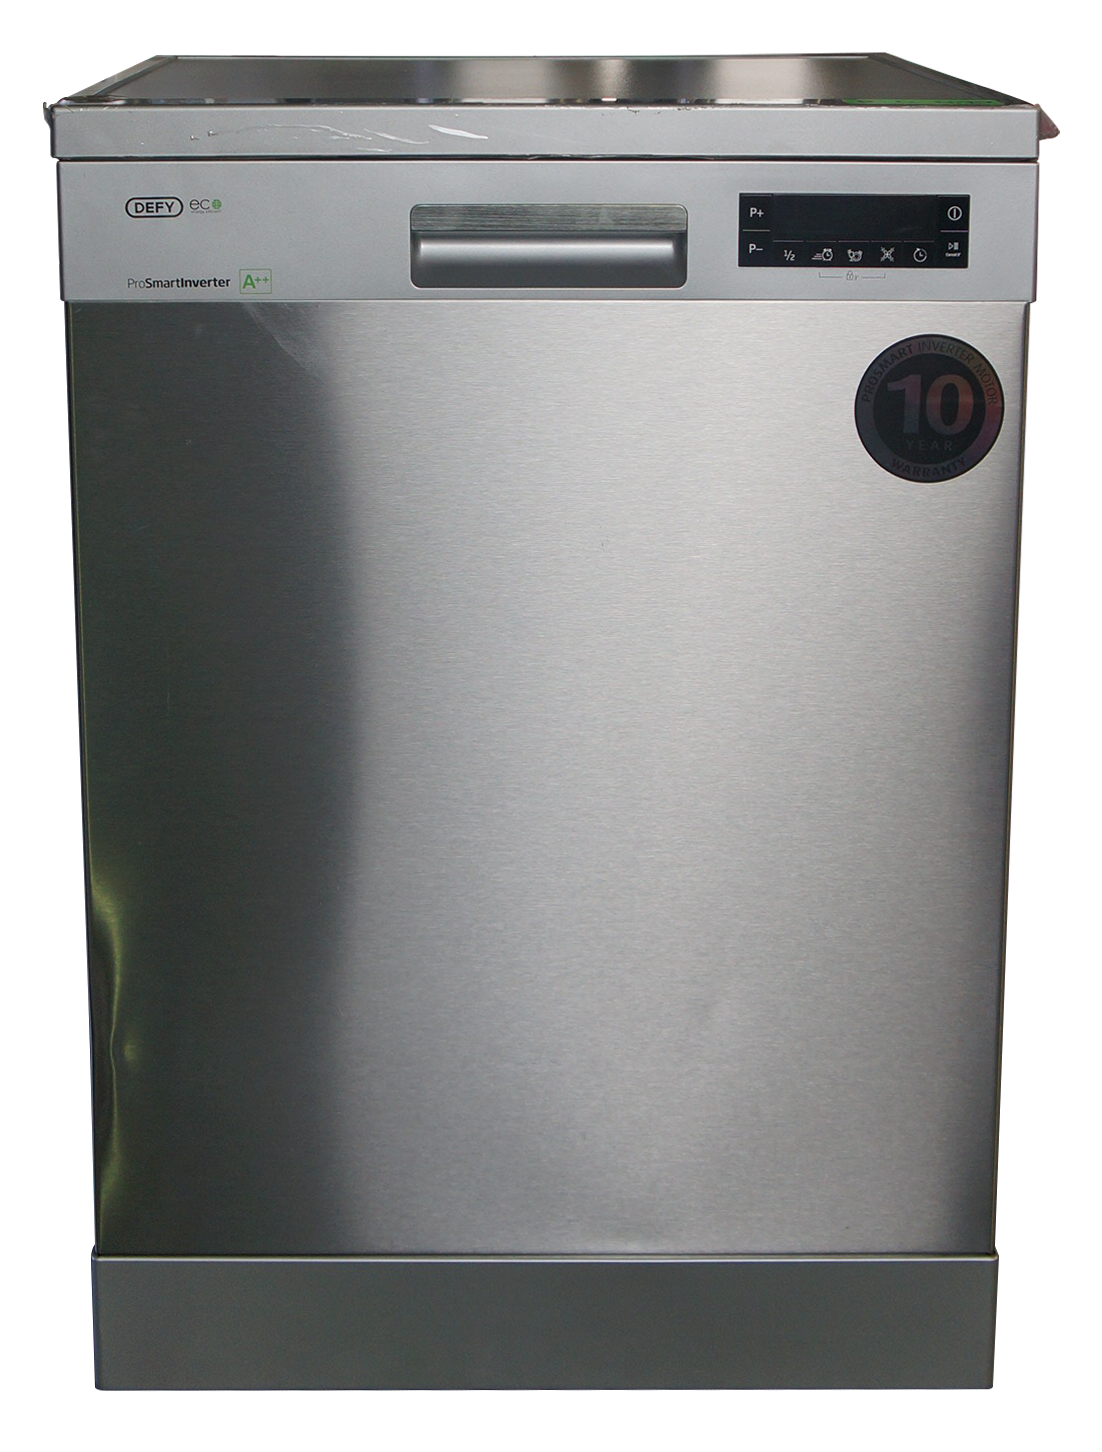 GT home appliances dishwasher cape town